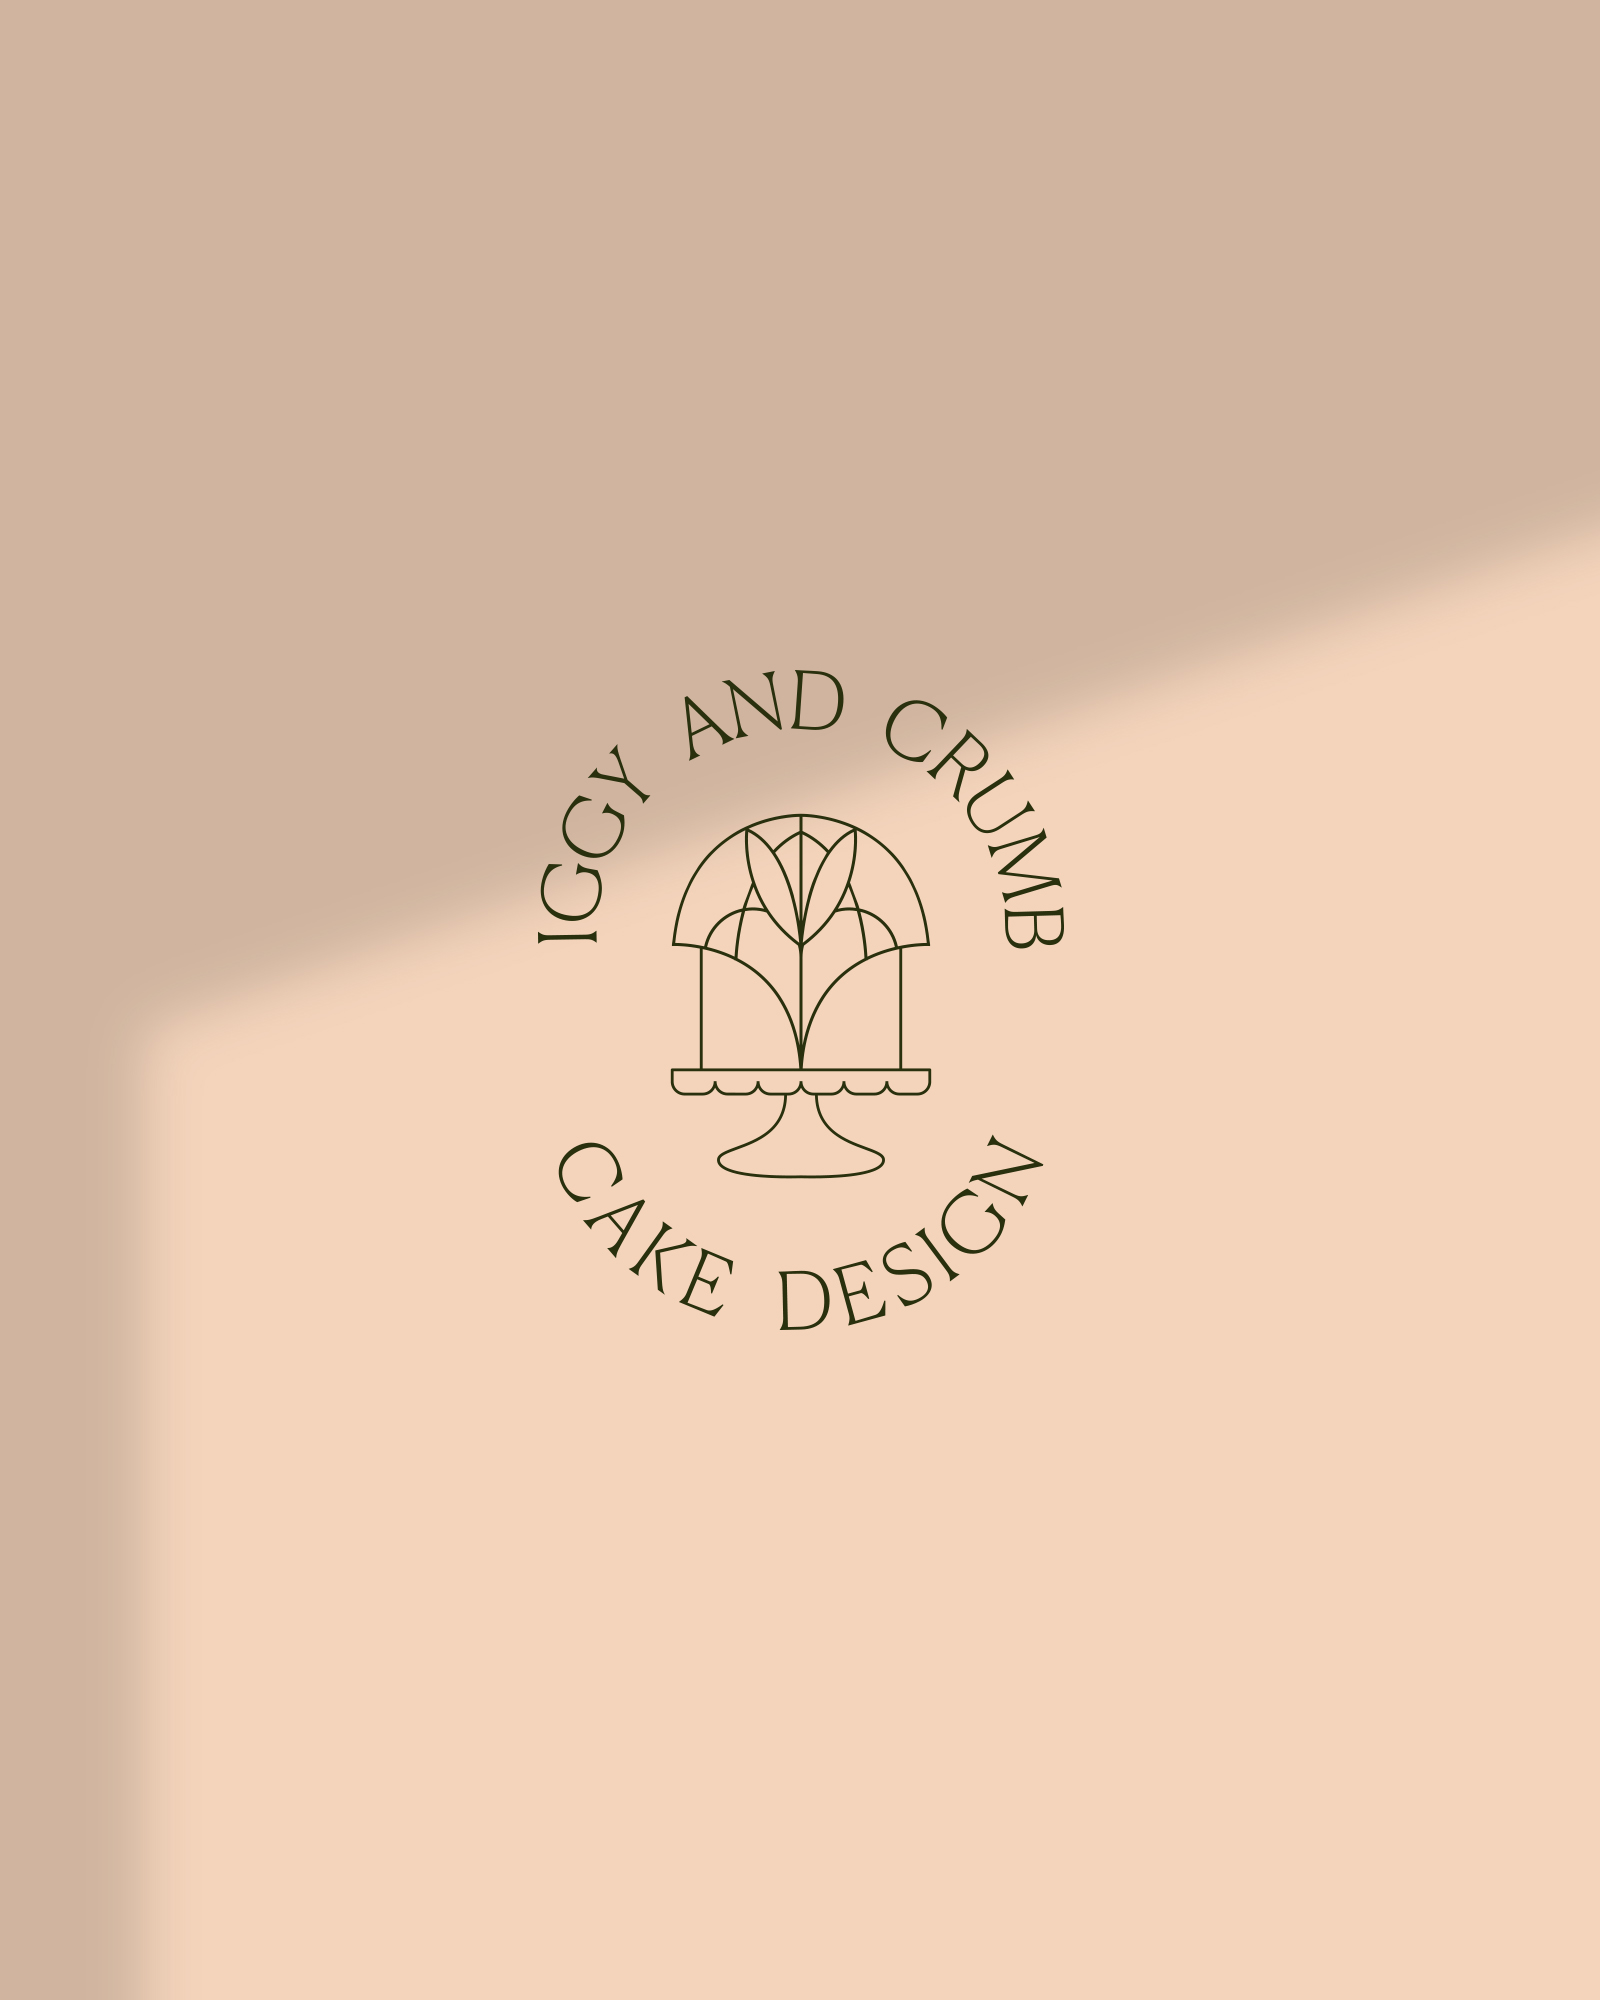 Iggy & Crumb Cake Design branding by Leysa Flores Design